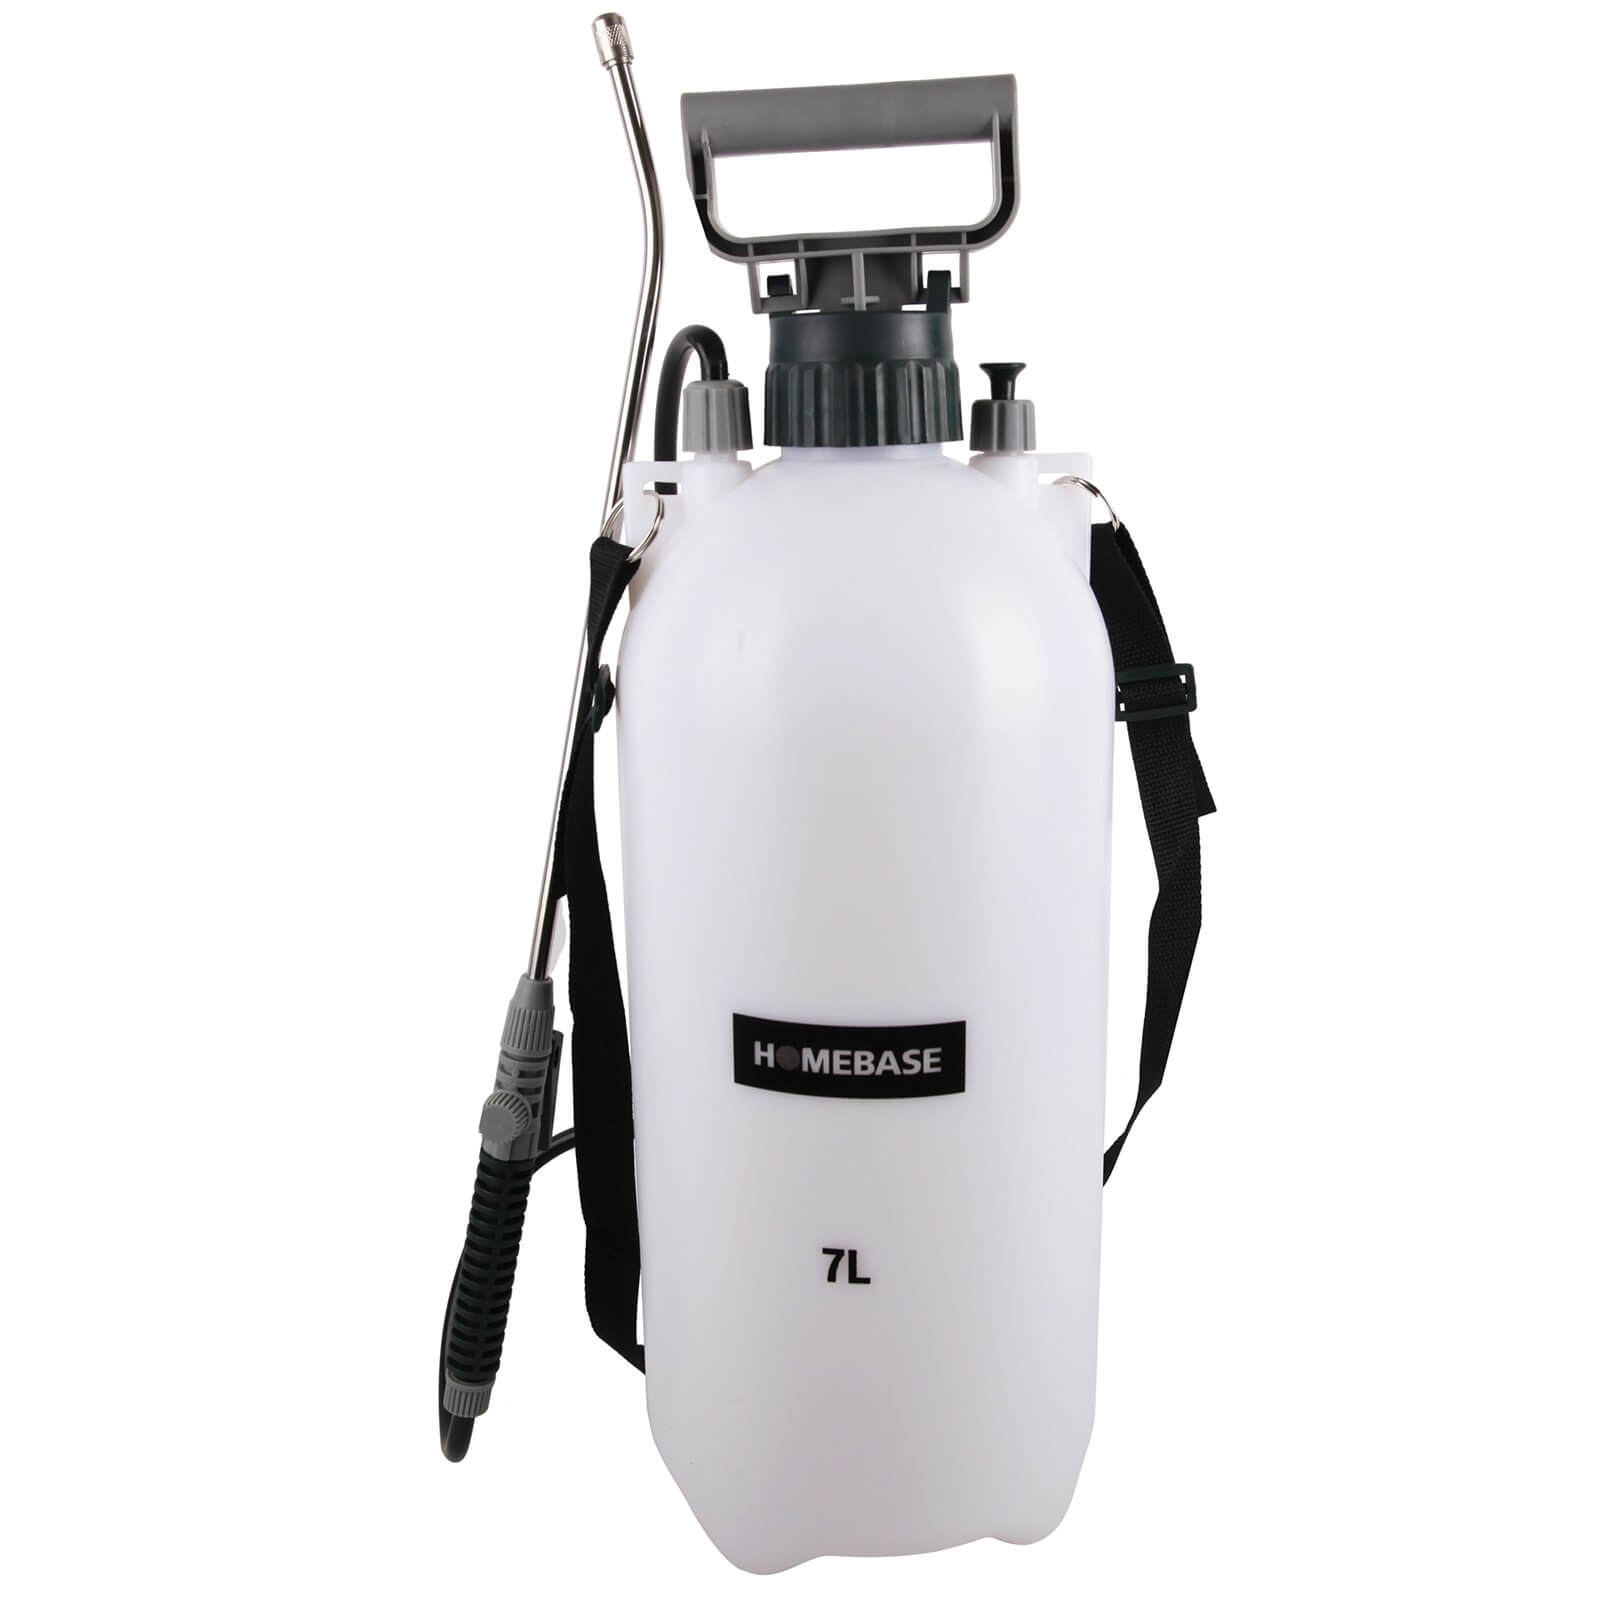 Homebase Pressure Sprayer - 7L